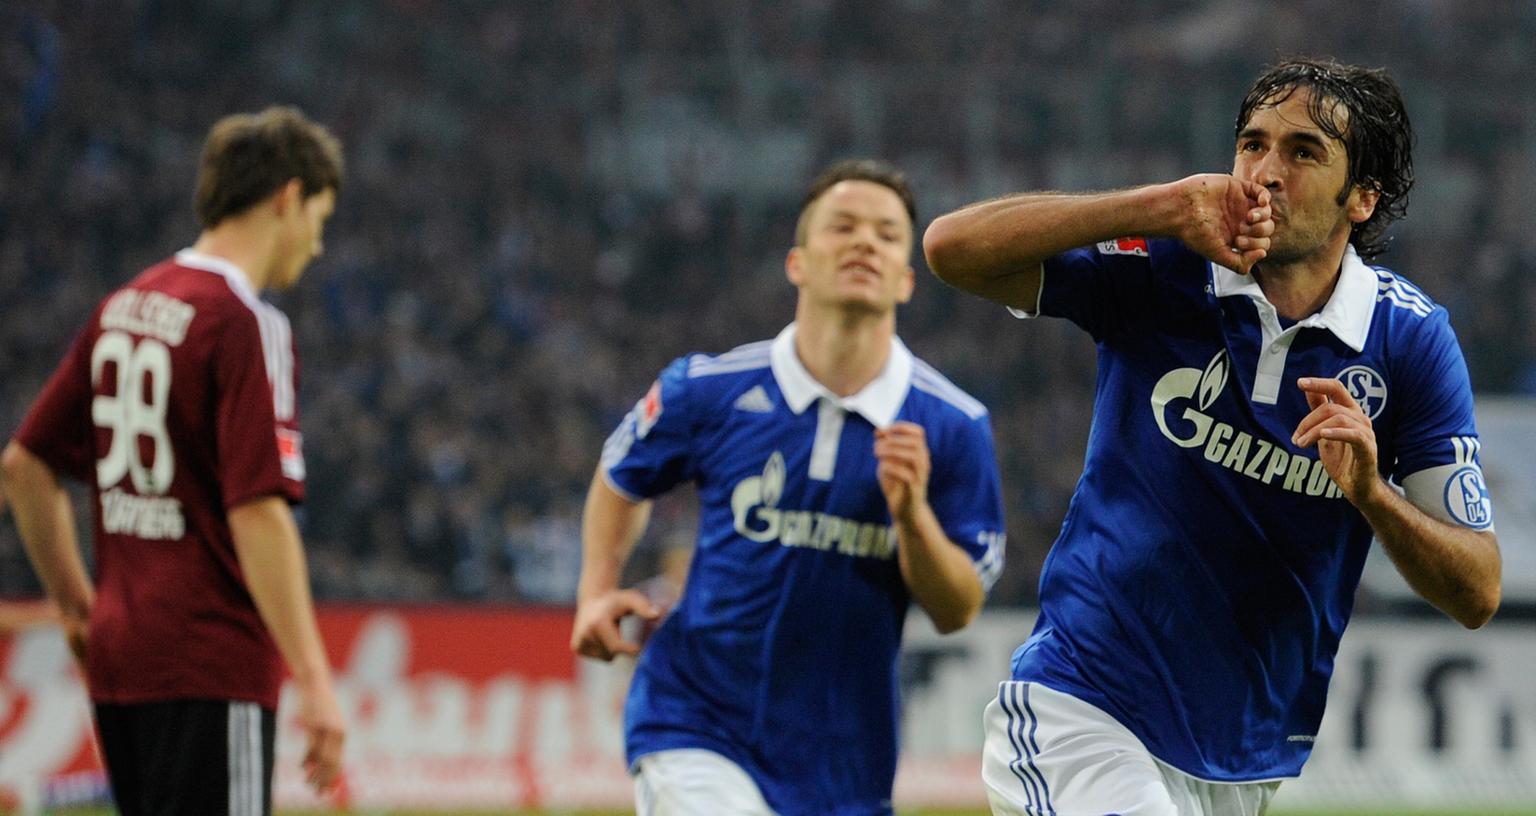 Club verliert gegen Schalke 0:4 